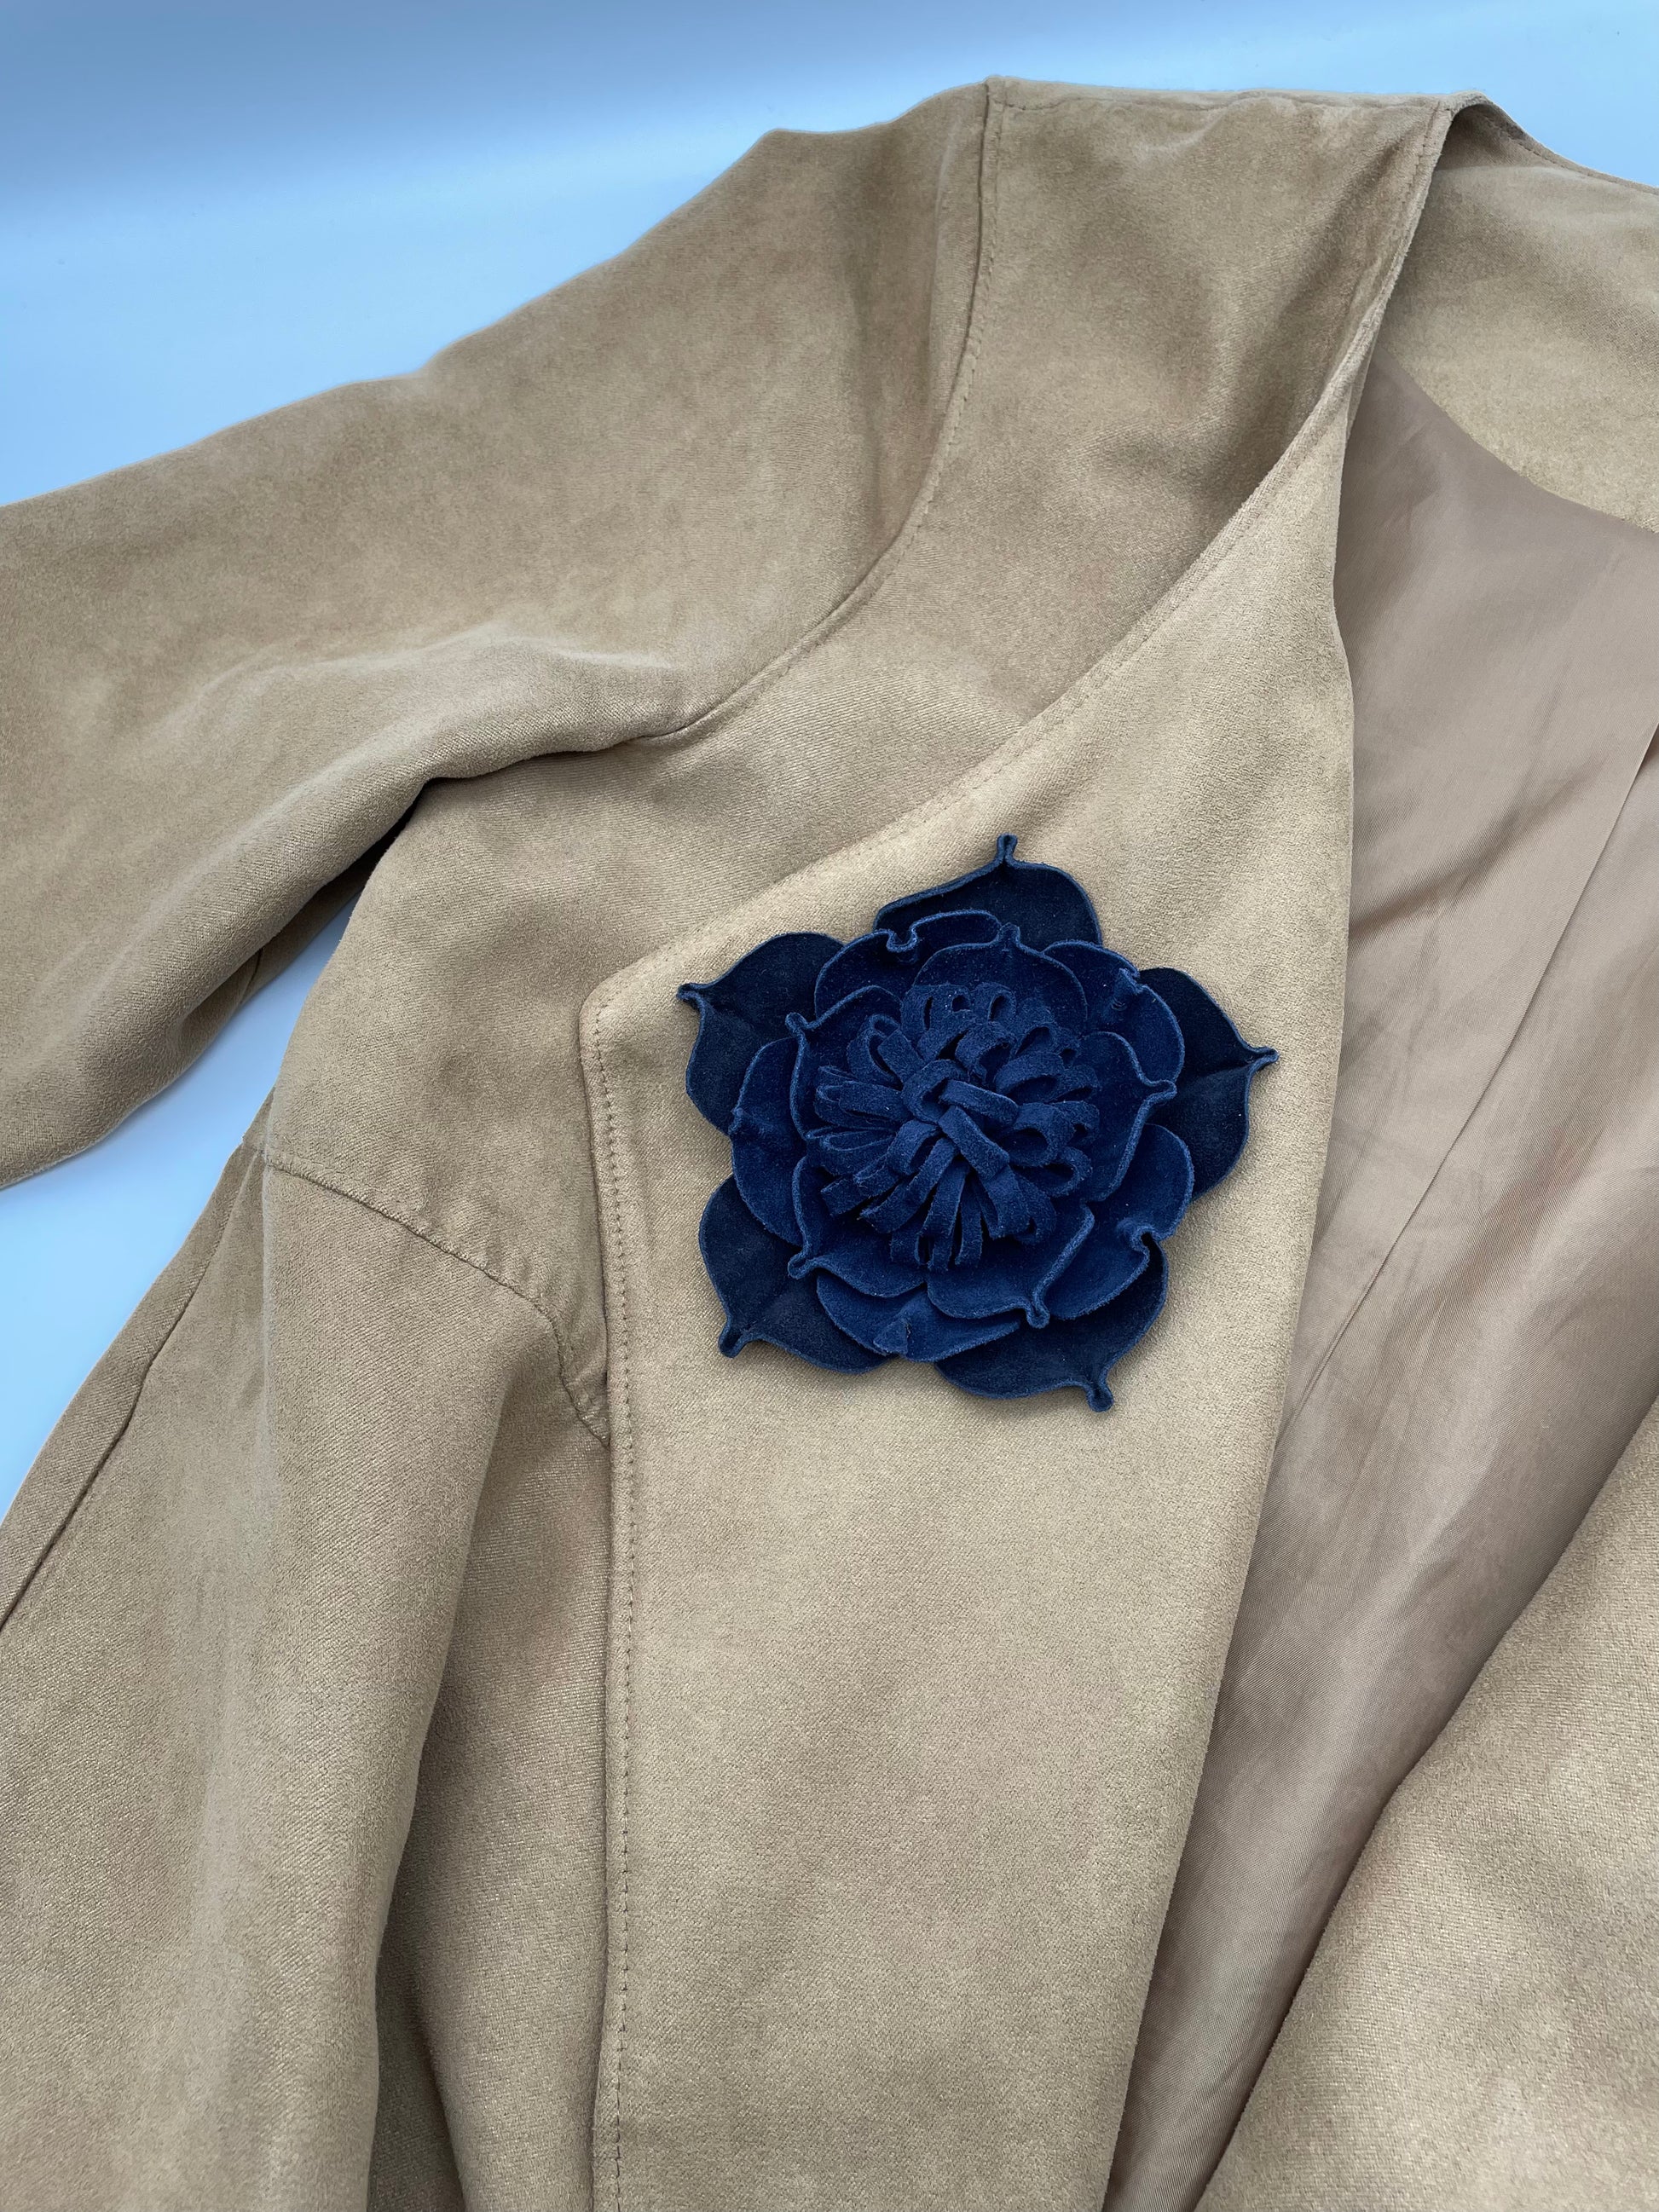 Upcycling brooch leather flower navi blue handmade flower jewlery on blazer